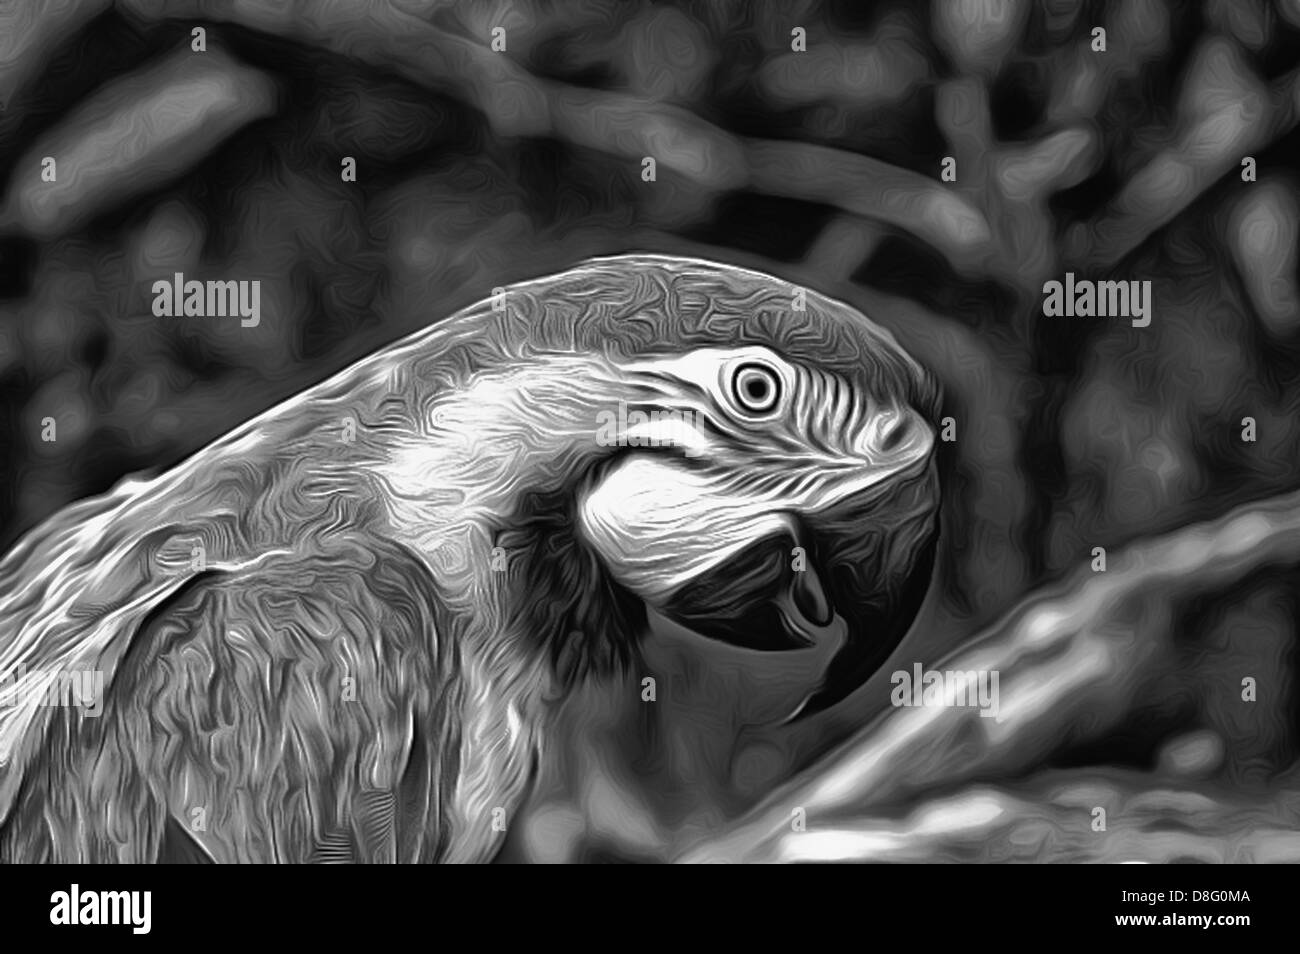 parrot-macaw-illustrations-animals-image-images-art-cg-birds-bird-ara-latin-ara-genus